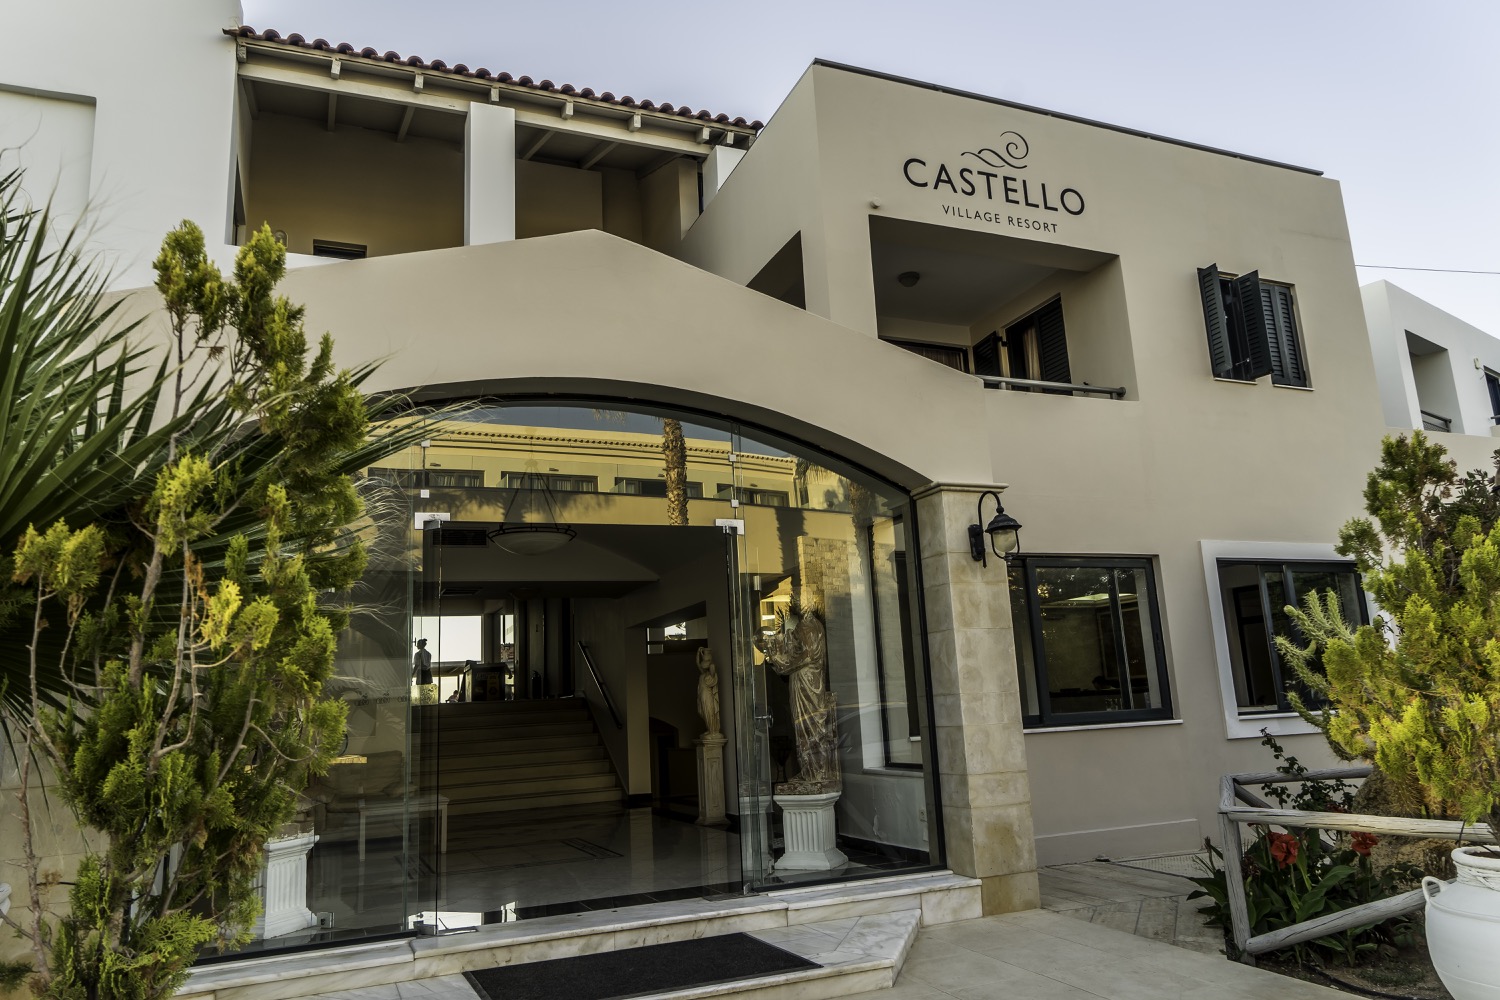 4* Castello Village Resort - Λασίθι, Κρήτη ✦ -11% ✦